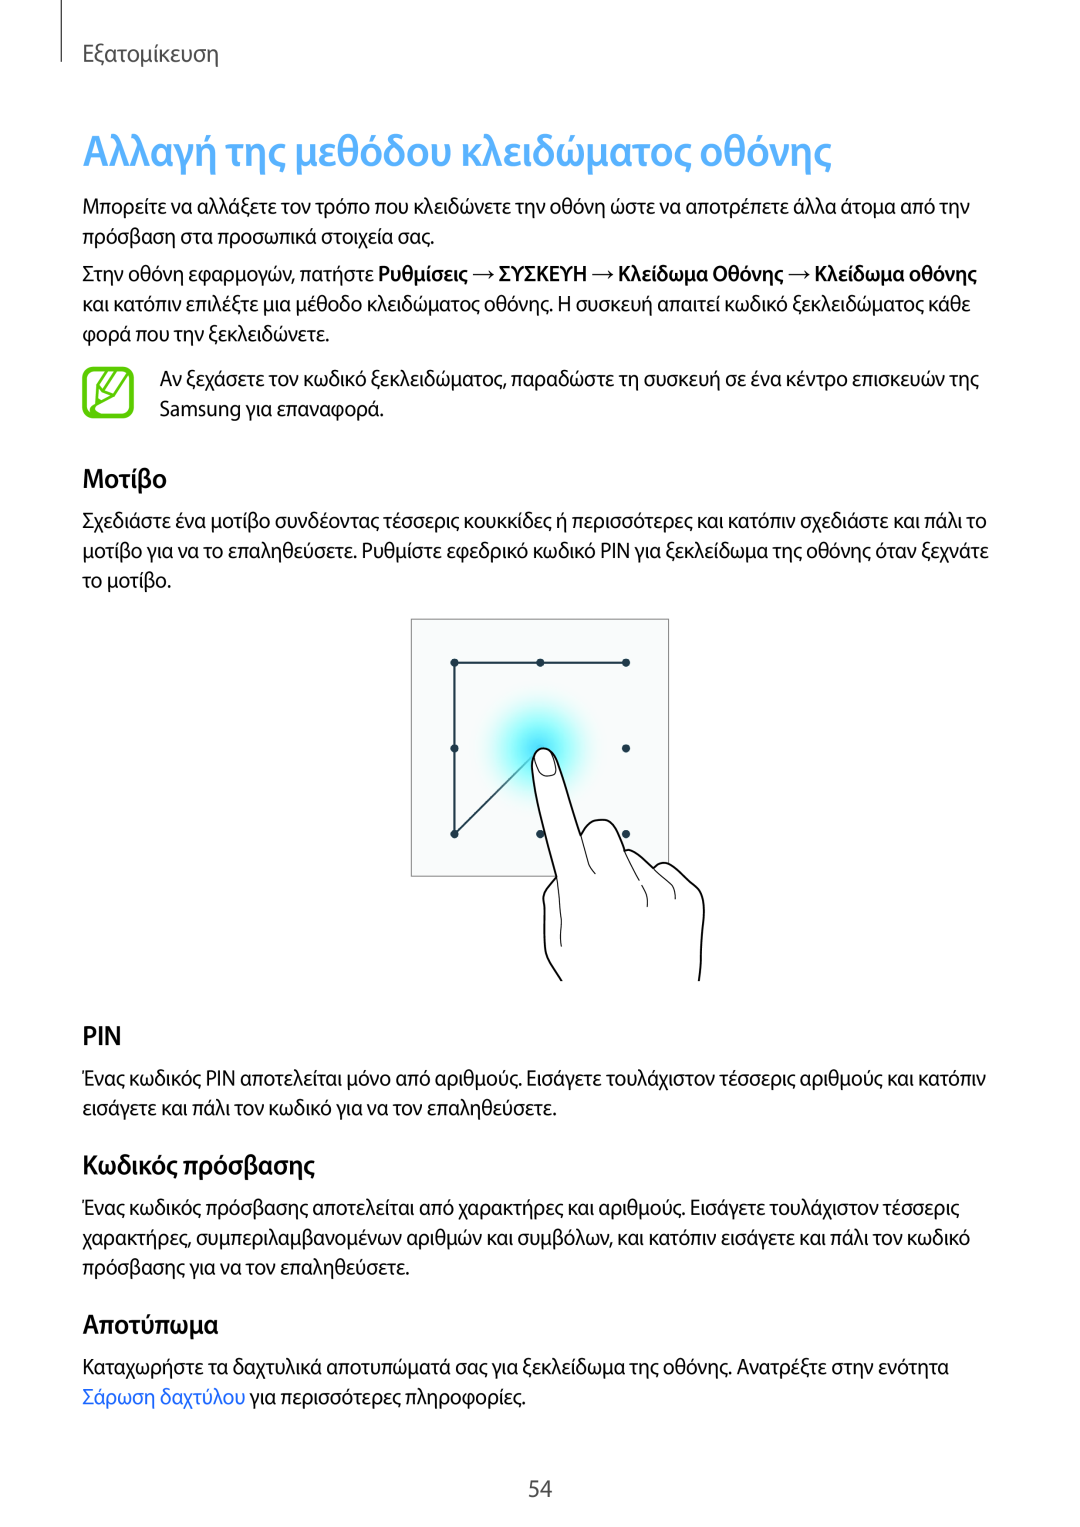 Samsung SM-T805NTSAEUR manual Αλλαγή της μεθόδου κλειδώματος οθόνης, Μοτίβο, Κωδικός πρόσβασης, Αποτύπωμα, Εξατομίκευση 